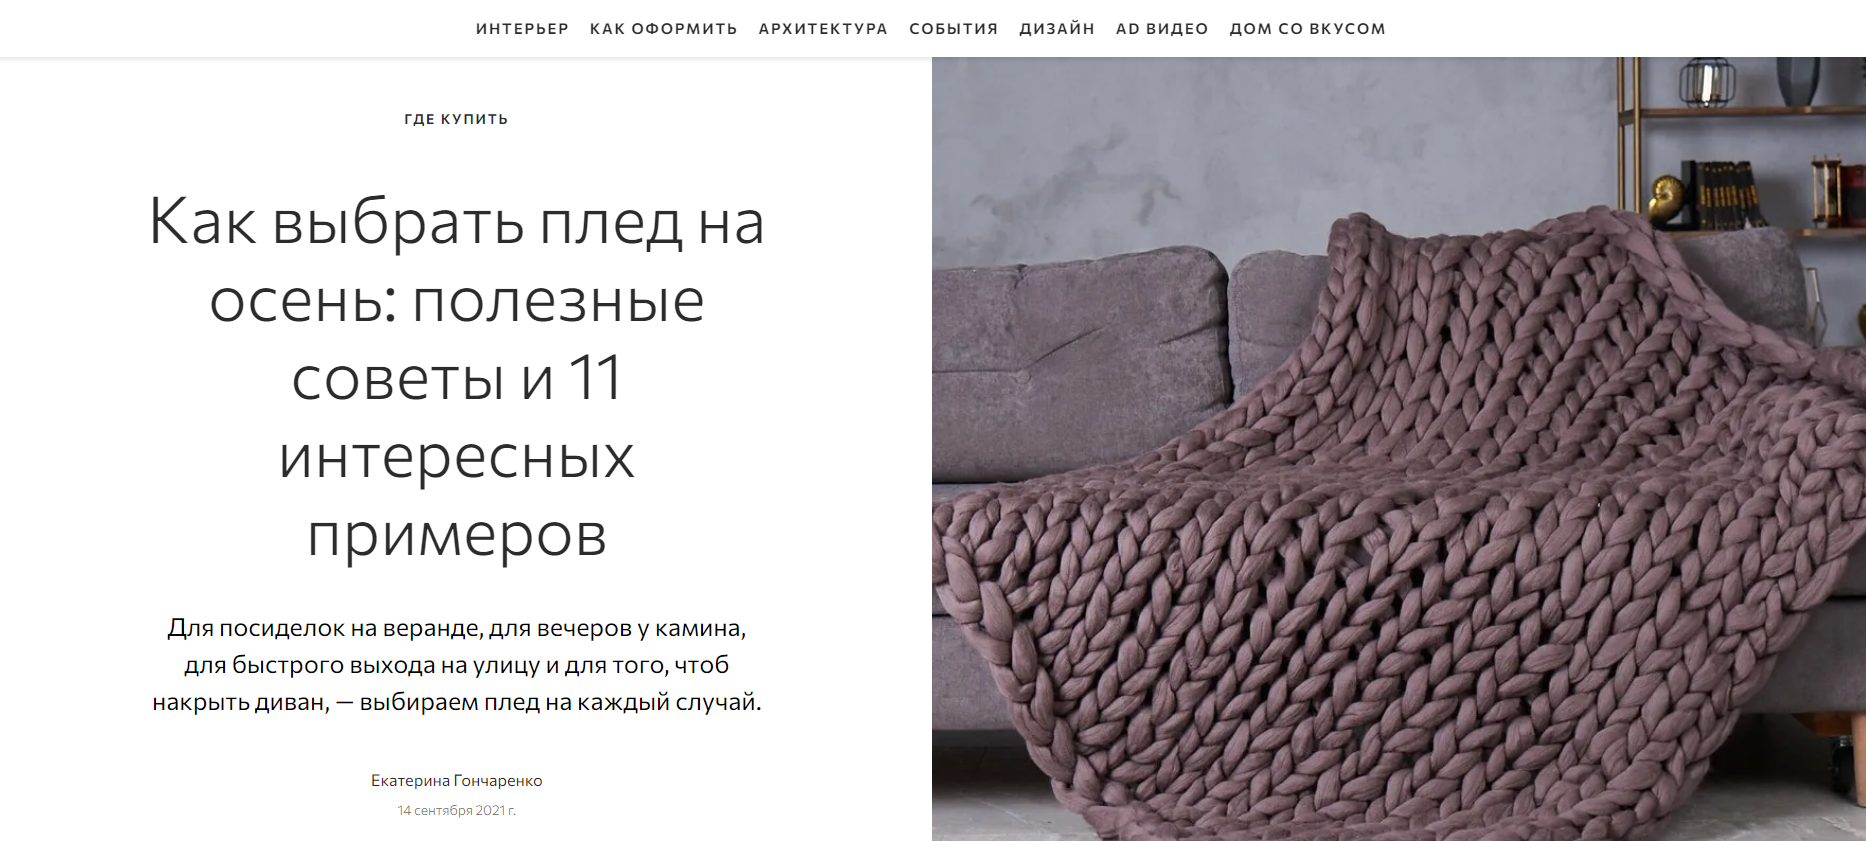 admagazine.ru: плед бренда Tkano в подборке "Как выбрать плед на осень"